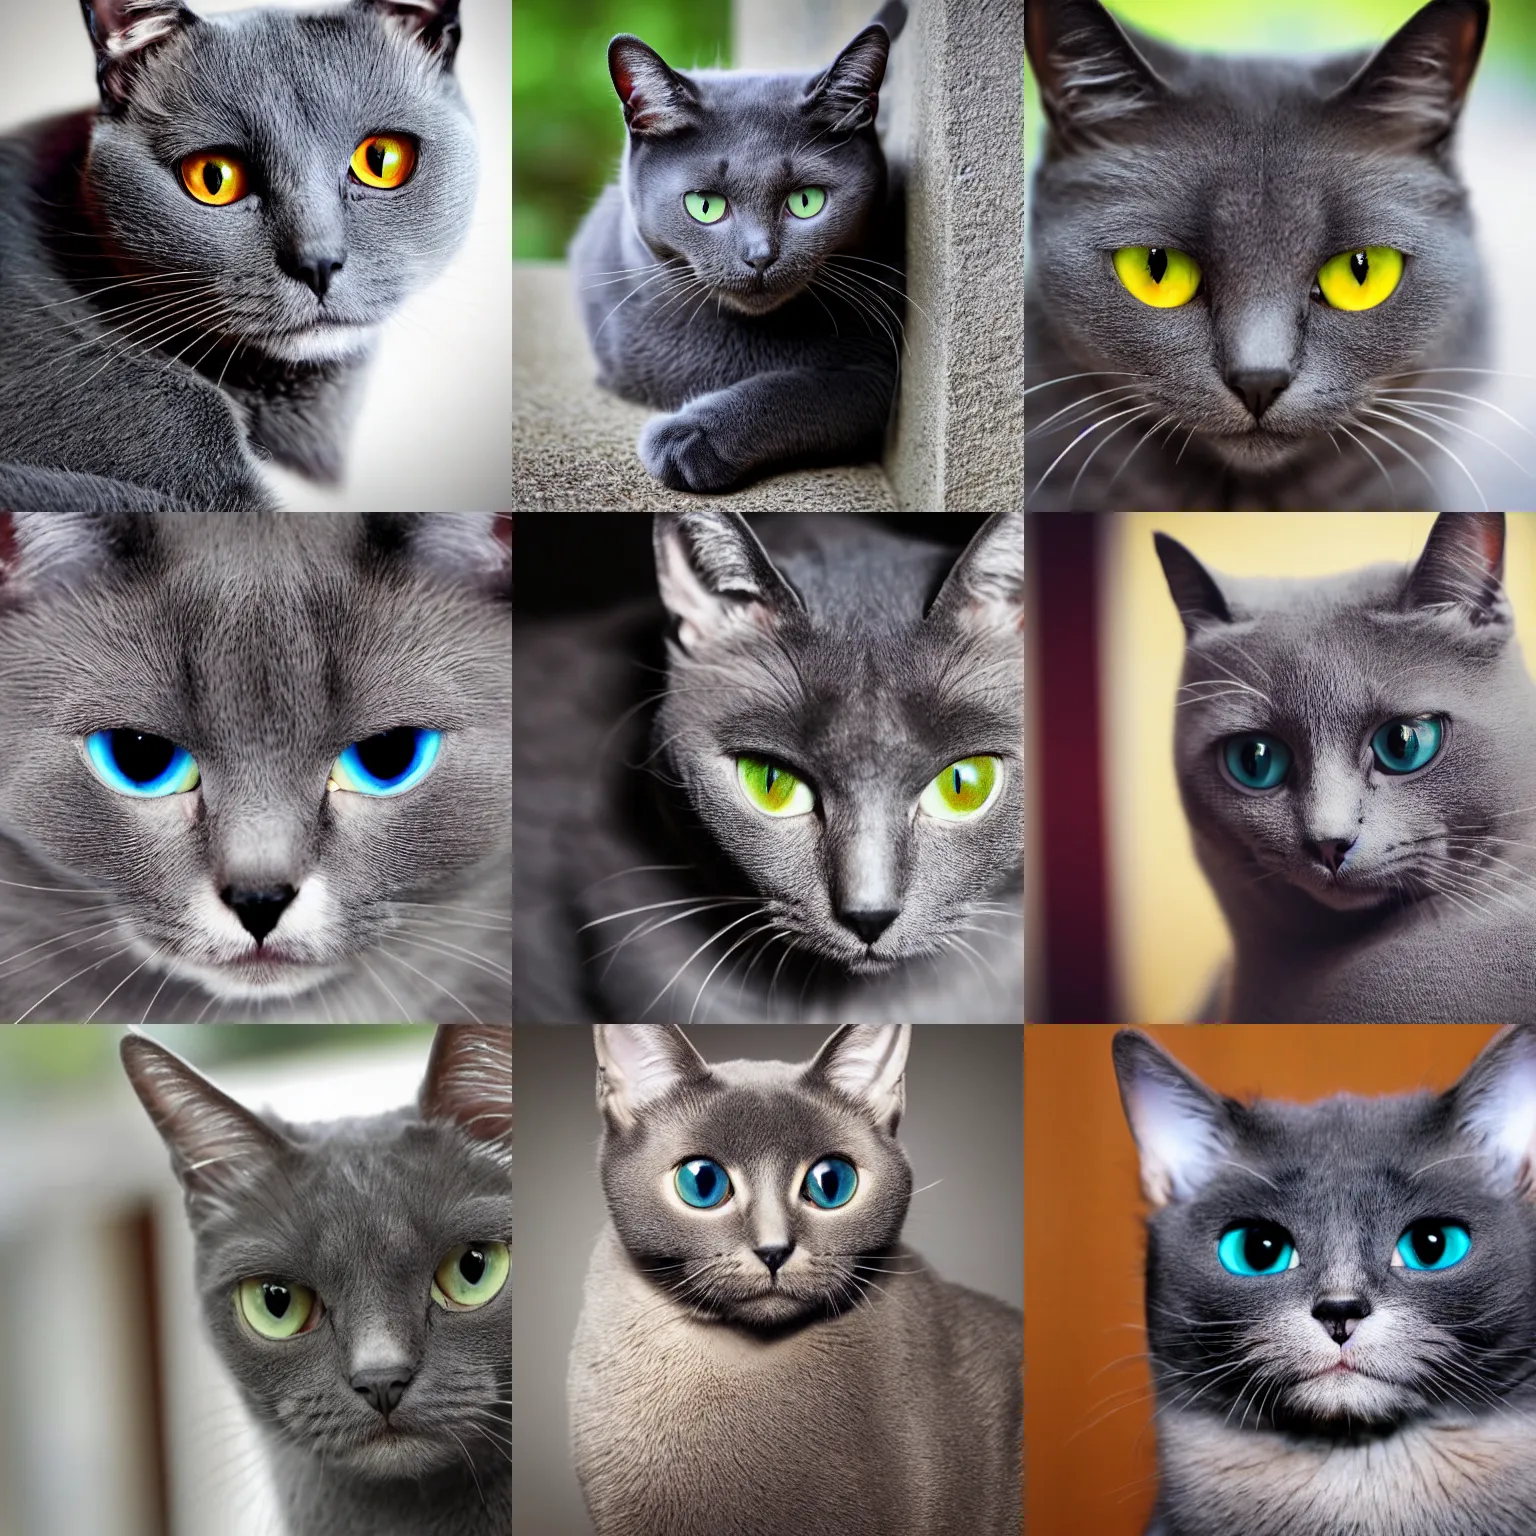 Prompt: dark grey cat with huge eyes